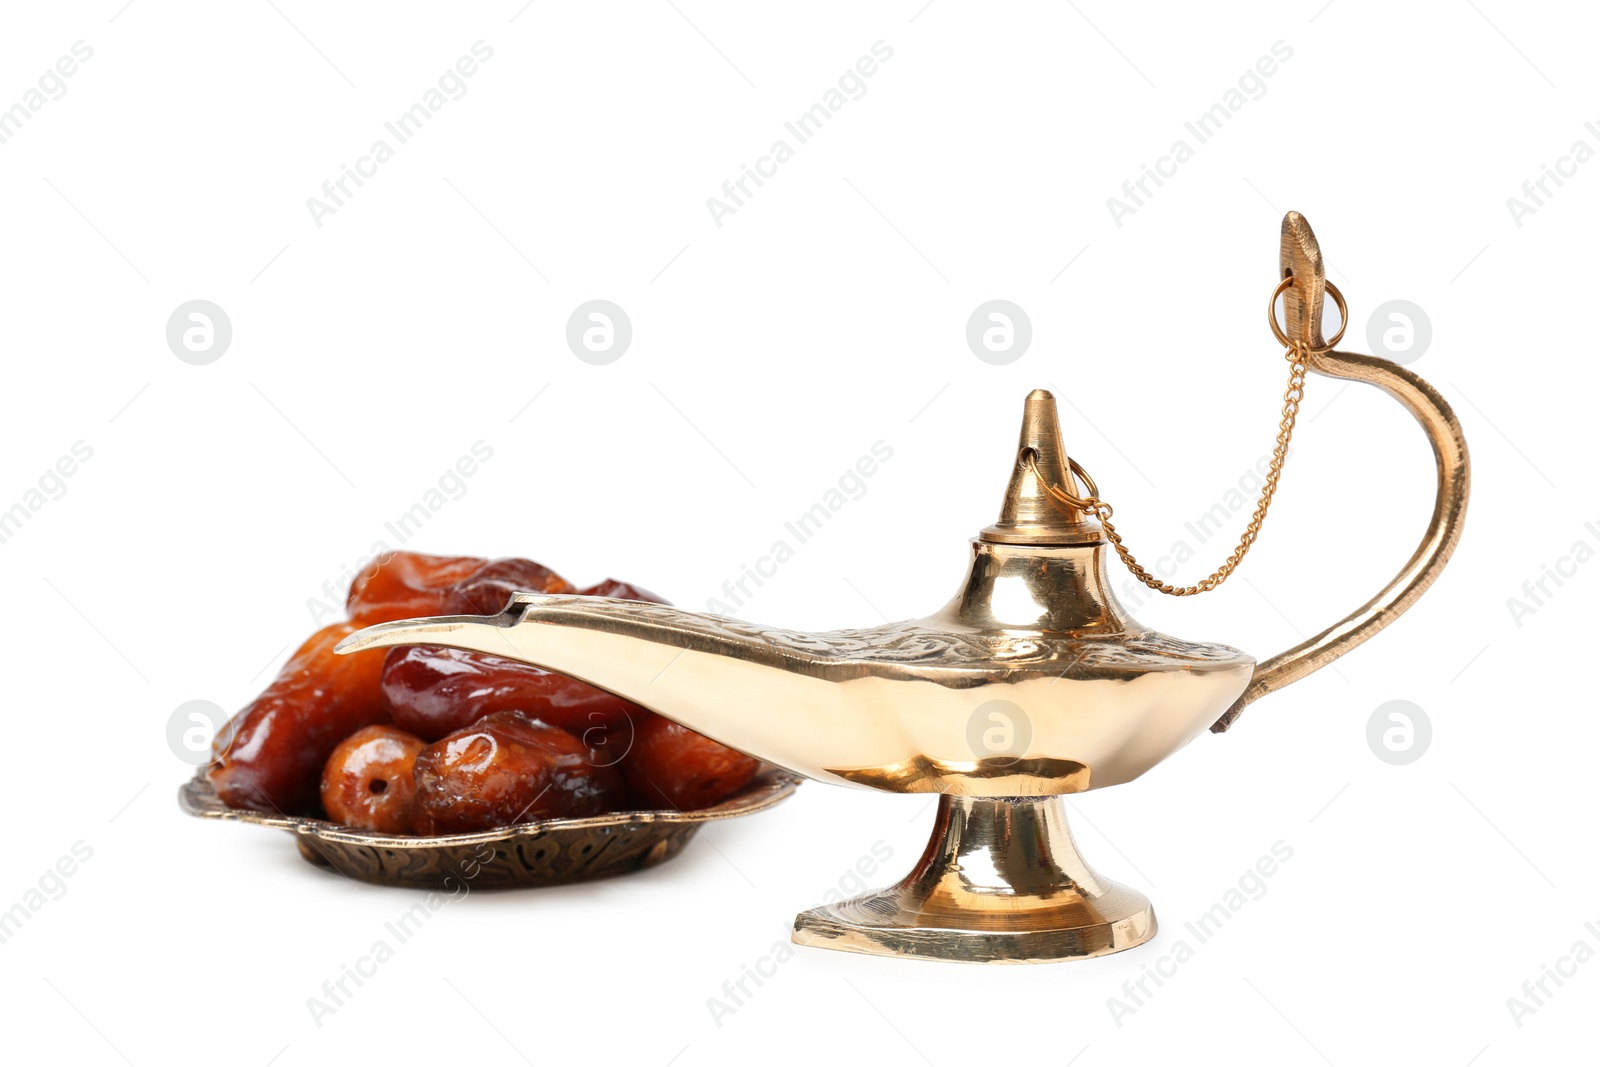 Photo of Aladdin magic lamp and dates on white background